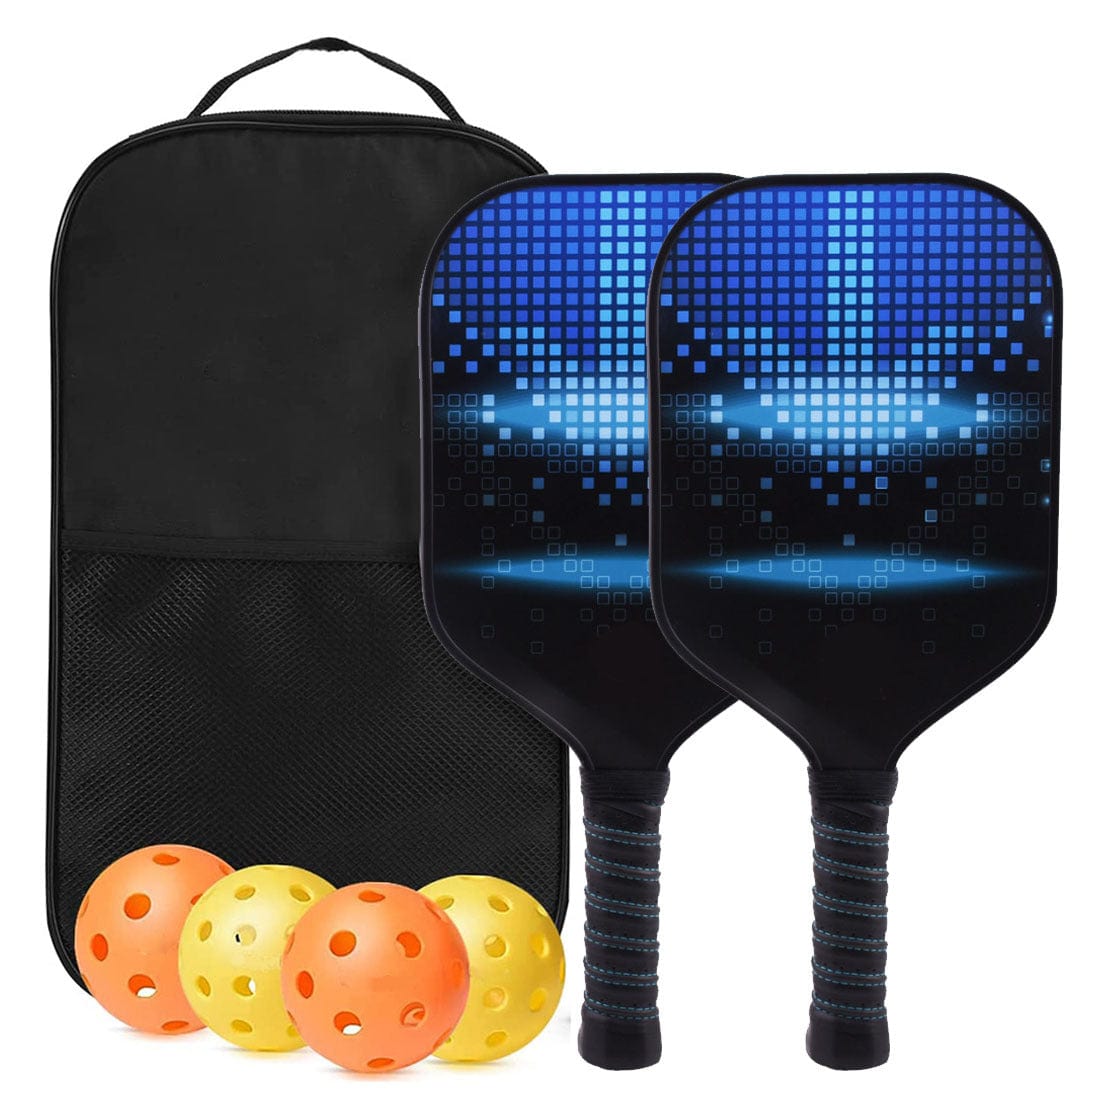 Carbon fiber aramid peak racket Pickleball Paddles PP honeycomb UV printed racket set